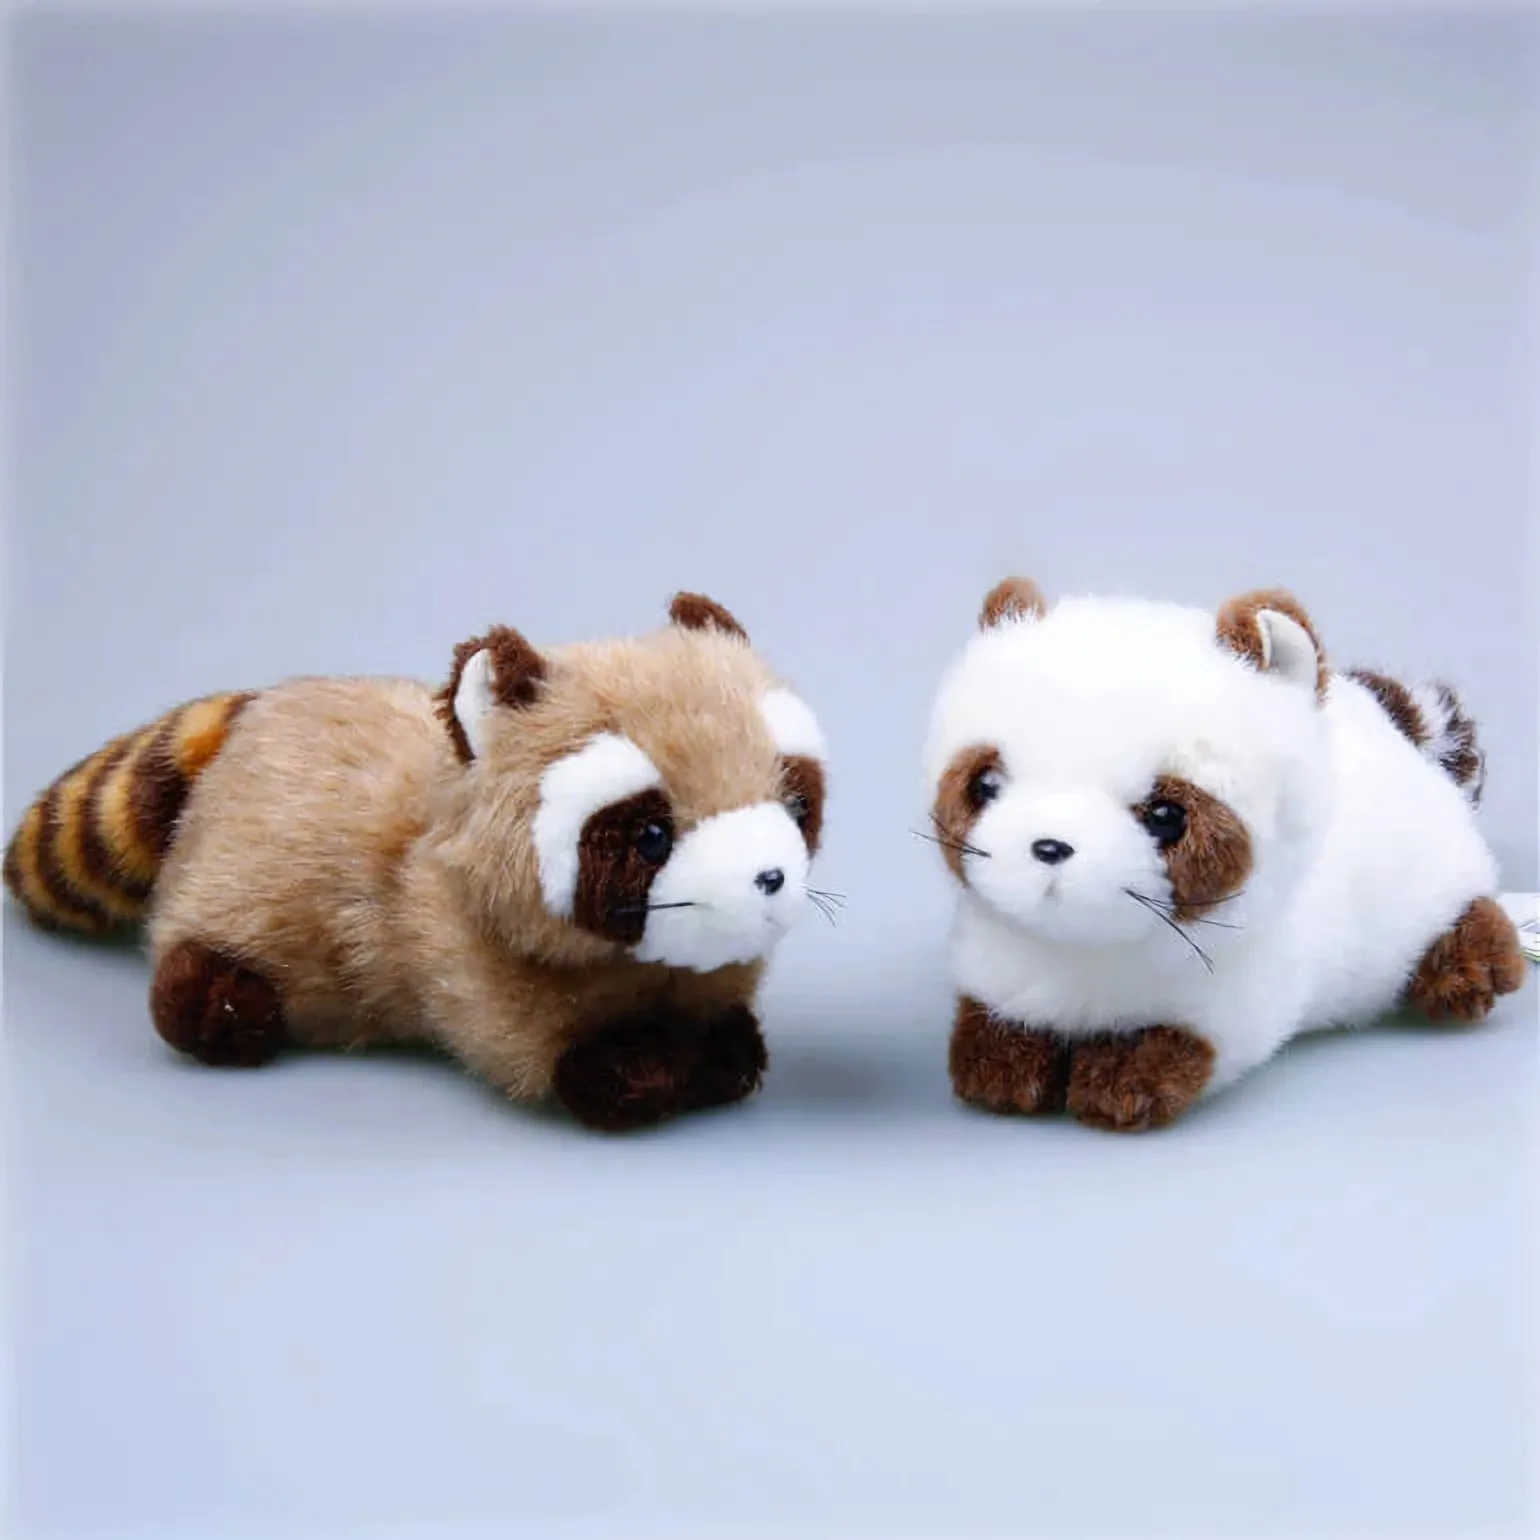 Little Raccoon Stuffed Animal,Stuffed Raccoon Plush Toy Soft Plushies Cute Plush Toys Gifts